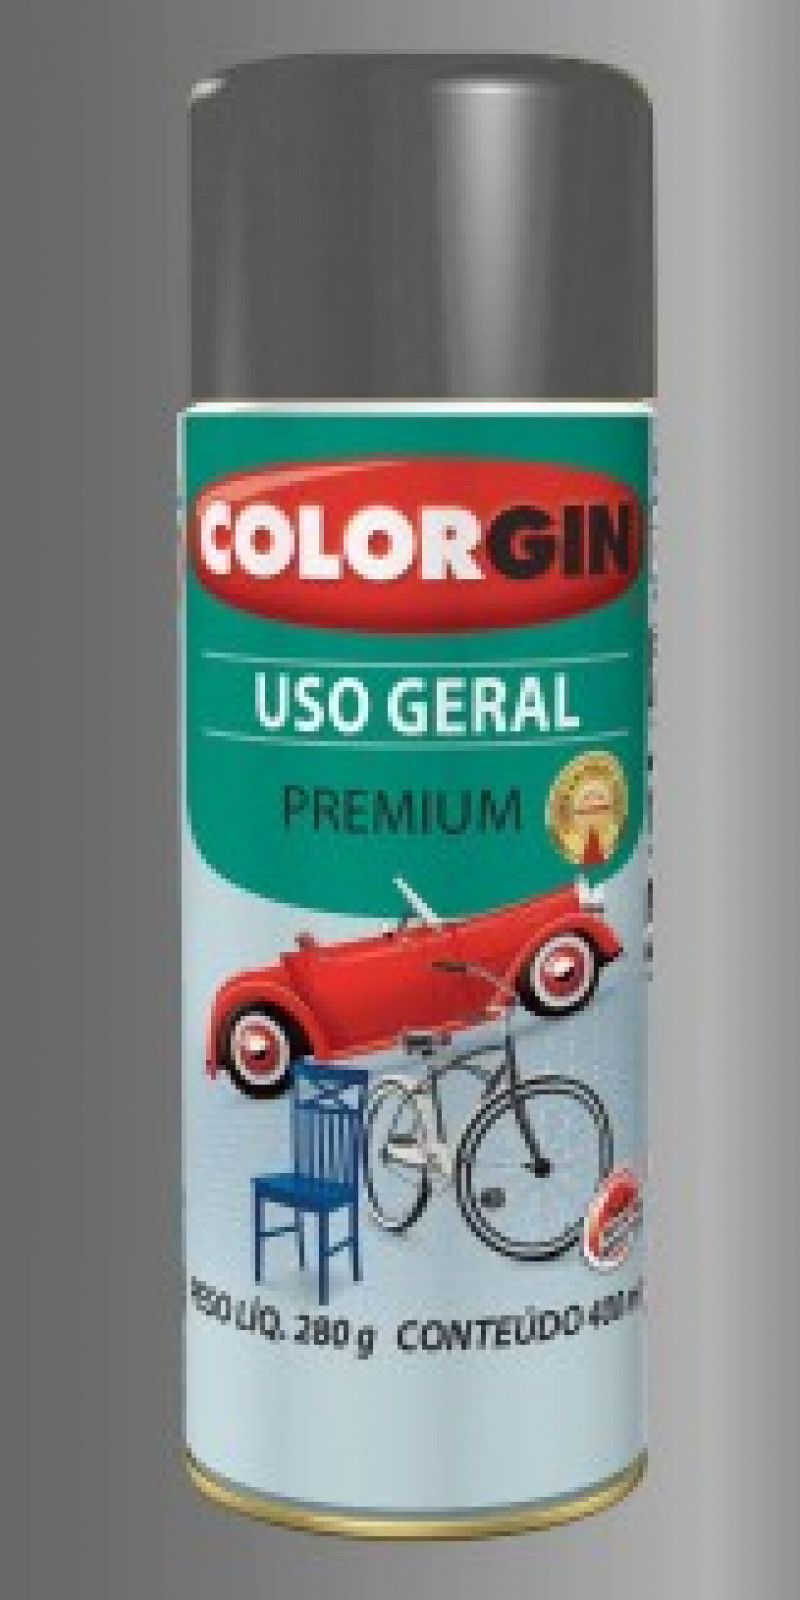 Tinta Spray Uso Geral Premium Grafite P/Rodas 400ml 57001 -Colorgin